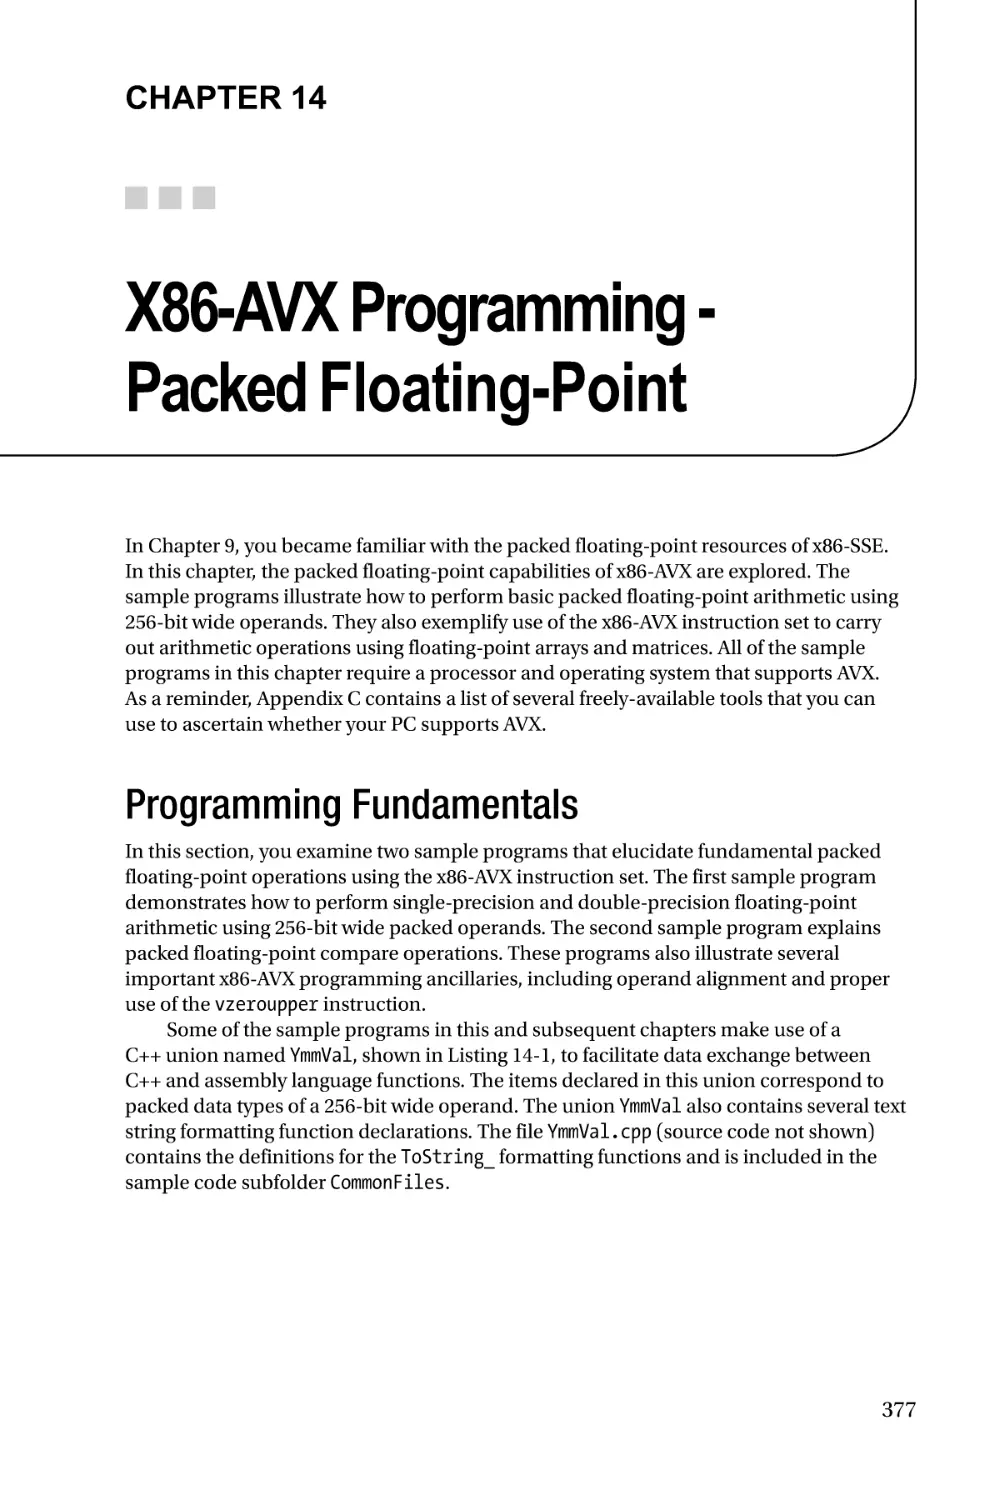 Chapter 14
Programming Fundamentals